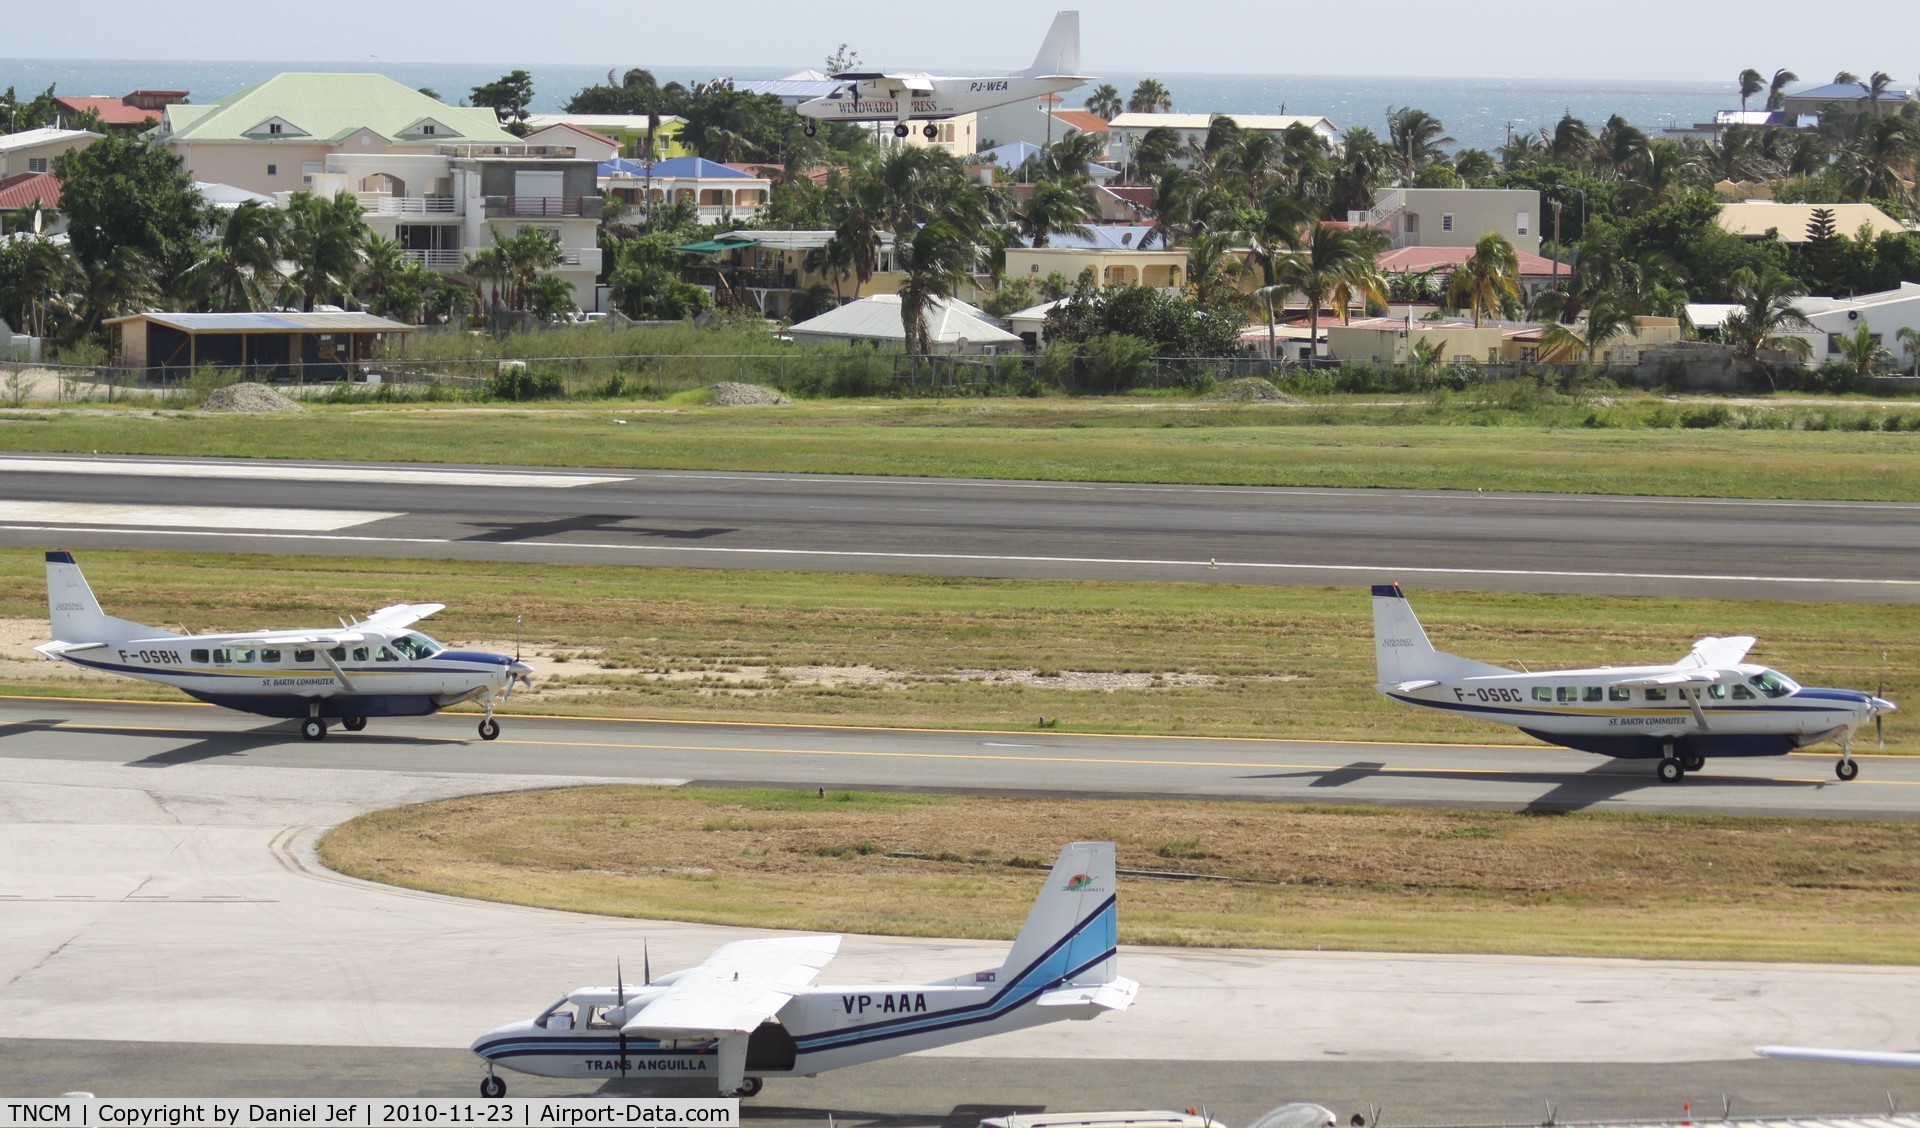 Princess Juliana International Airport, Philipsburg, Sint Maarten Netherlands Antilles (TNCM) - Some small action going on at TNCM